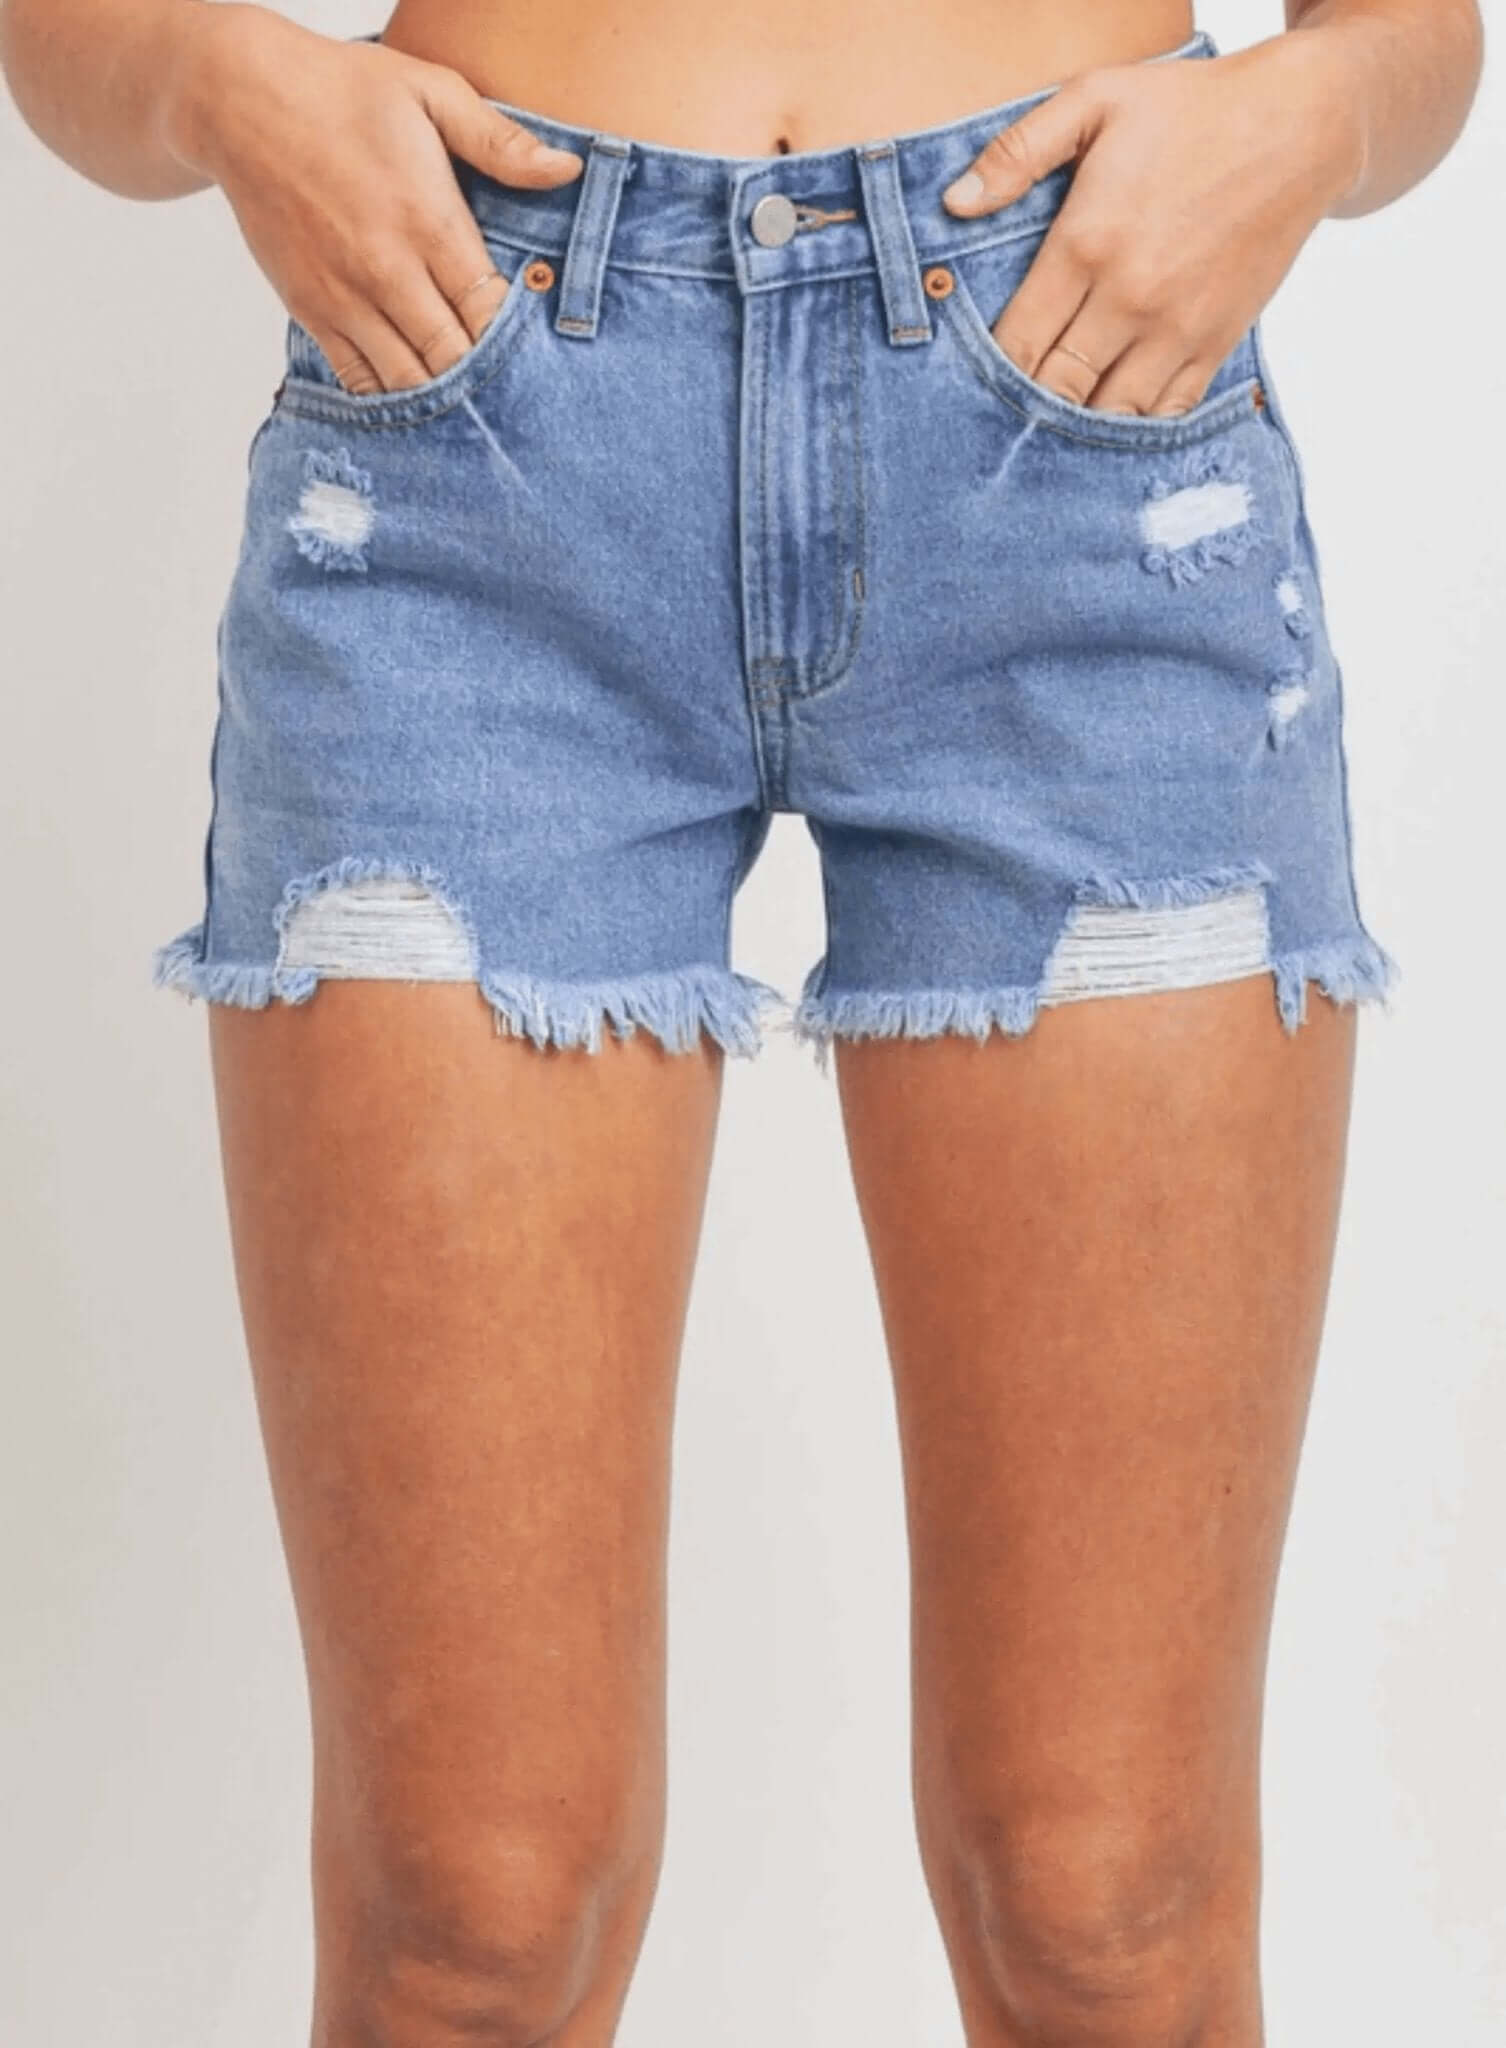 Boyfriend Distressed Jeans Shorts - Rocca & Co